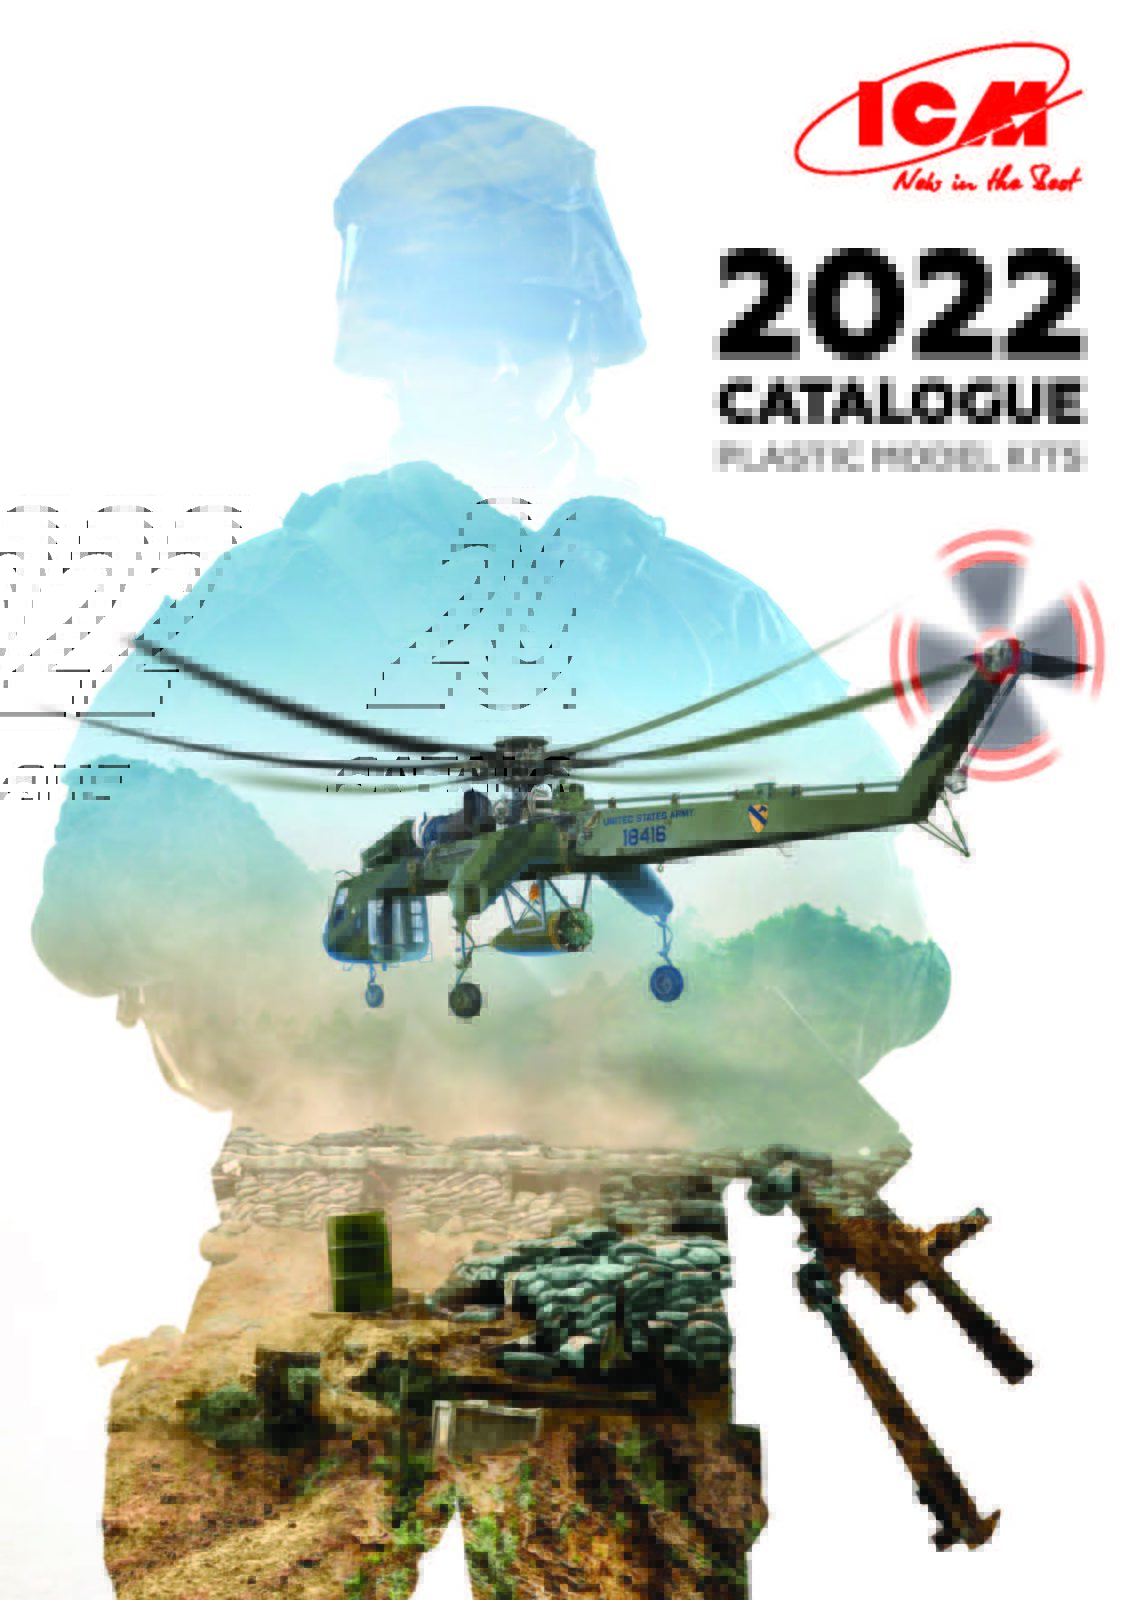 ICM catalog for 2022